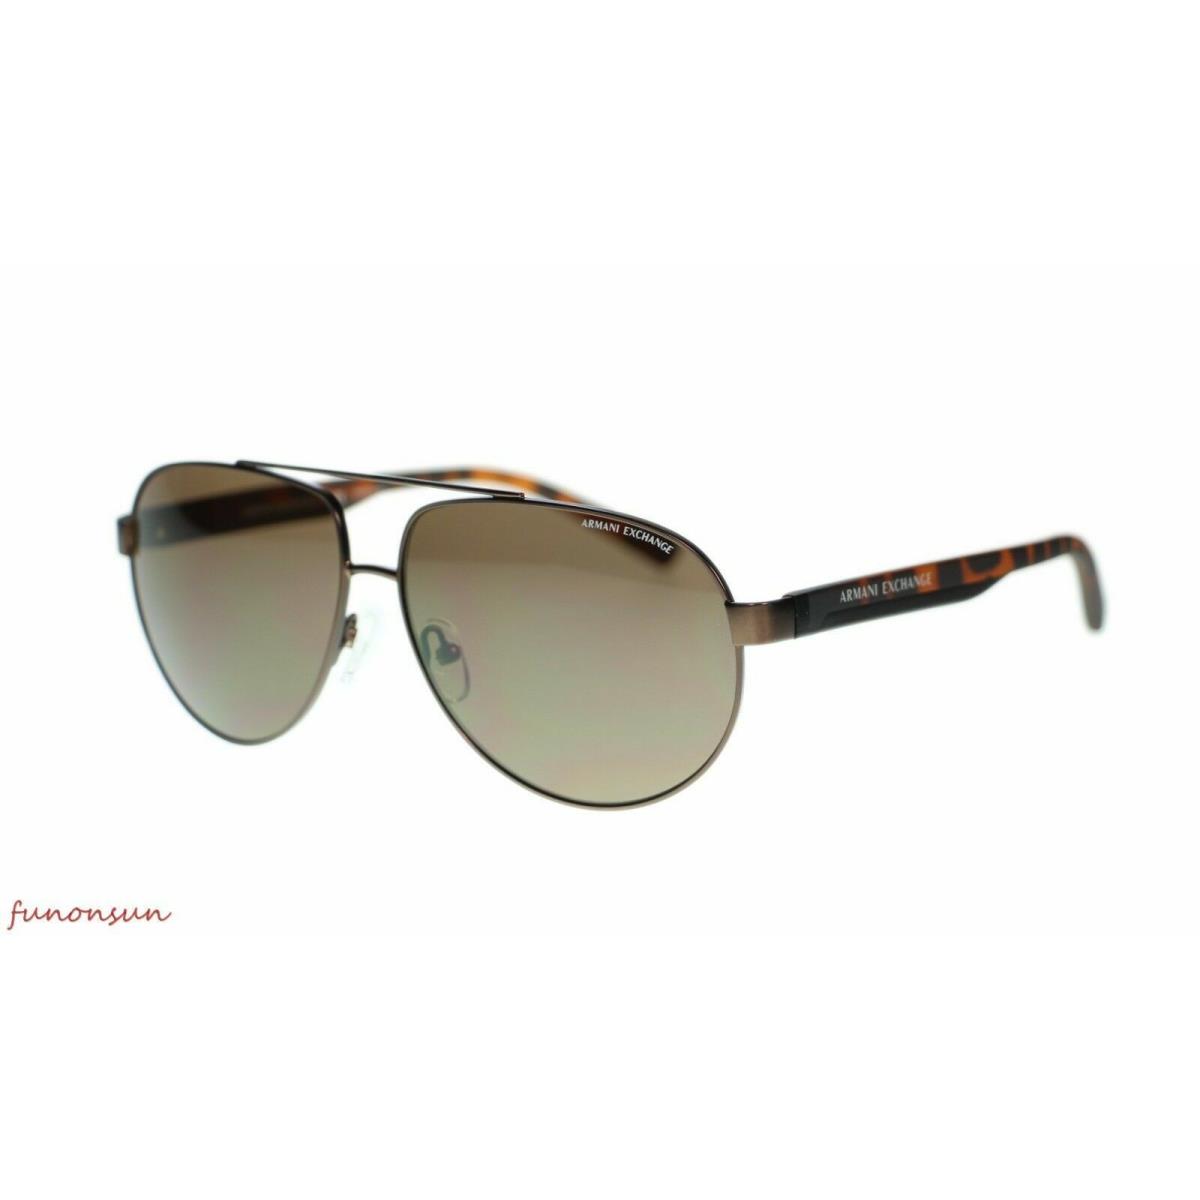 Armani Exchange Men Sunglasses AX2022 Metal Frame 60mm 609873 Matte Brown Havana